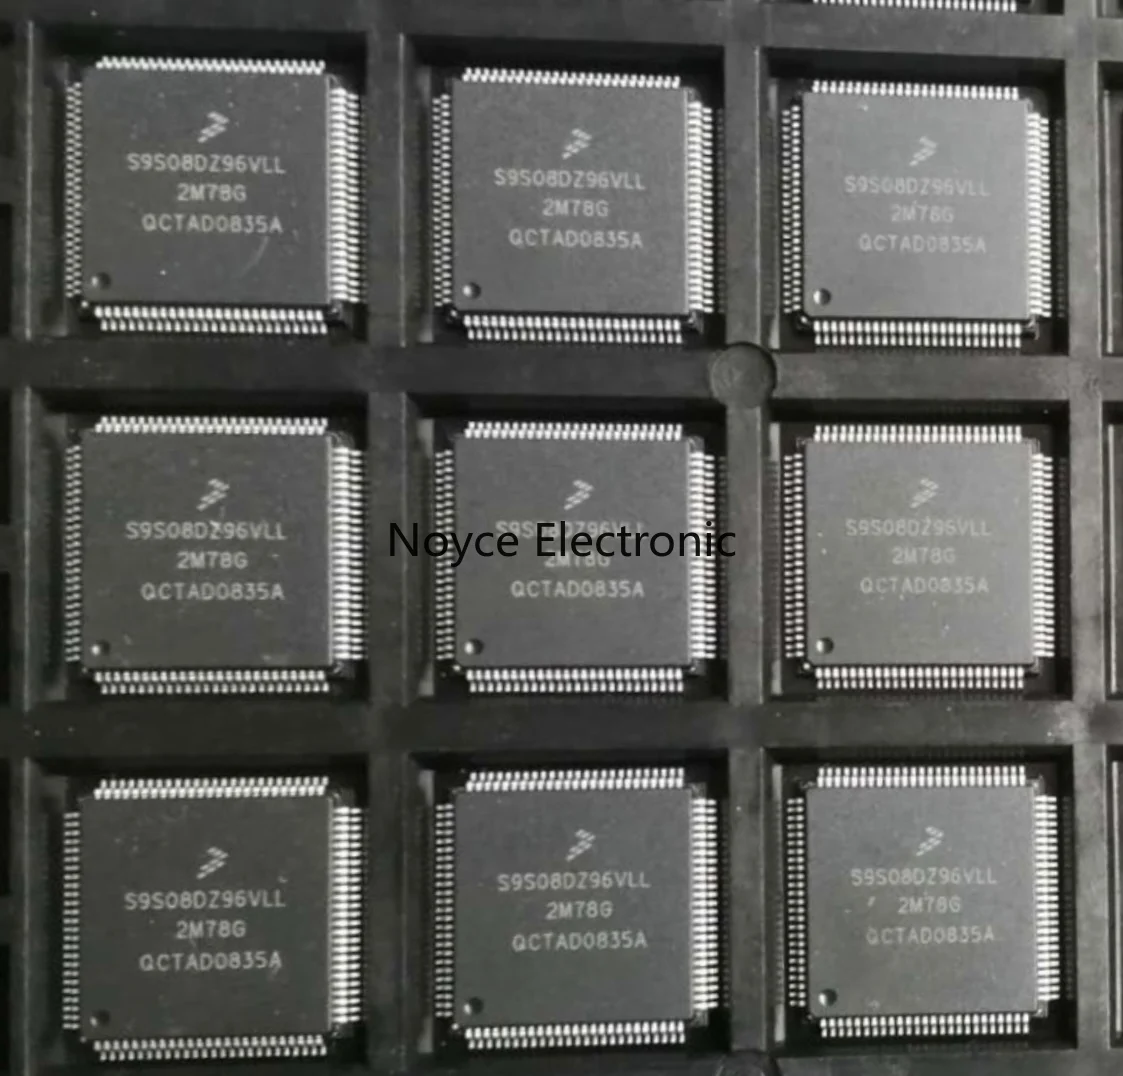 1pcs/S9S08DZ96 new original genuine spot S9S08DZ96VLL TQFP100 microcontroller chip